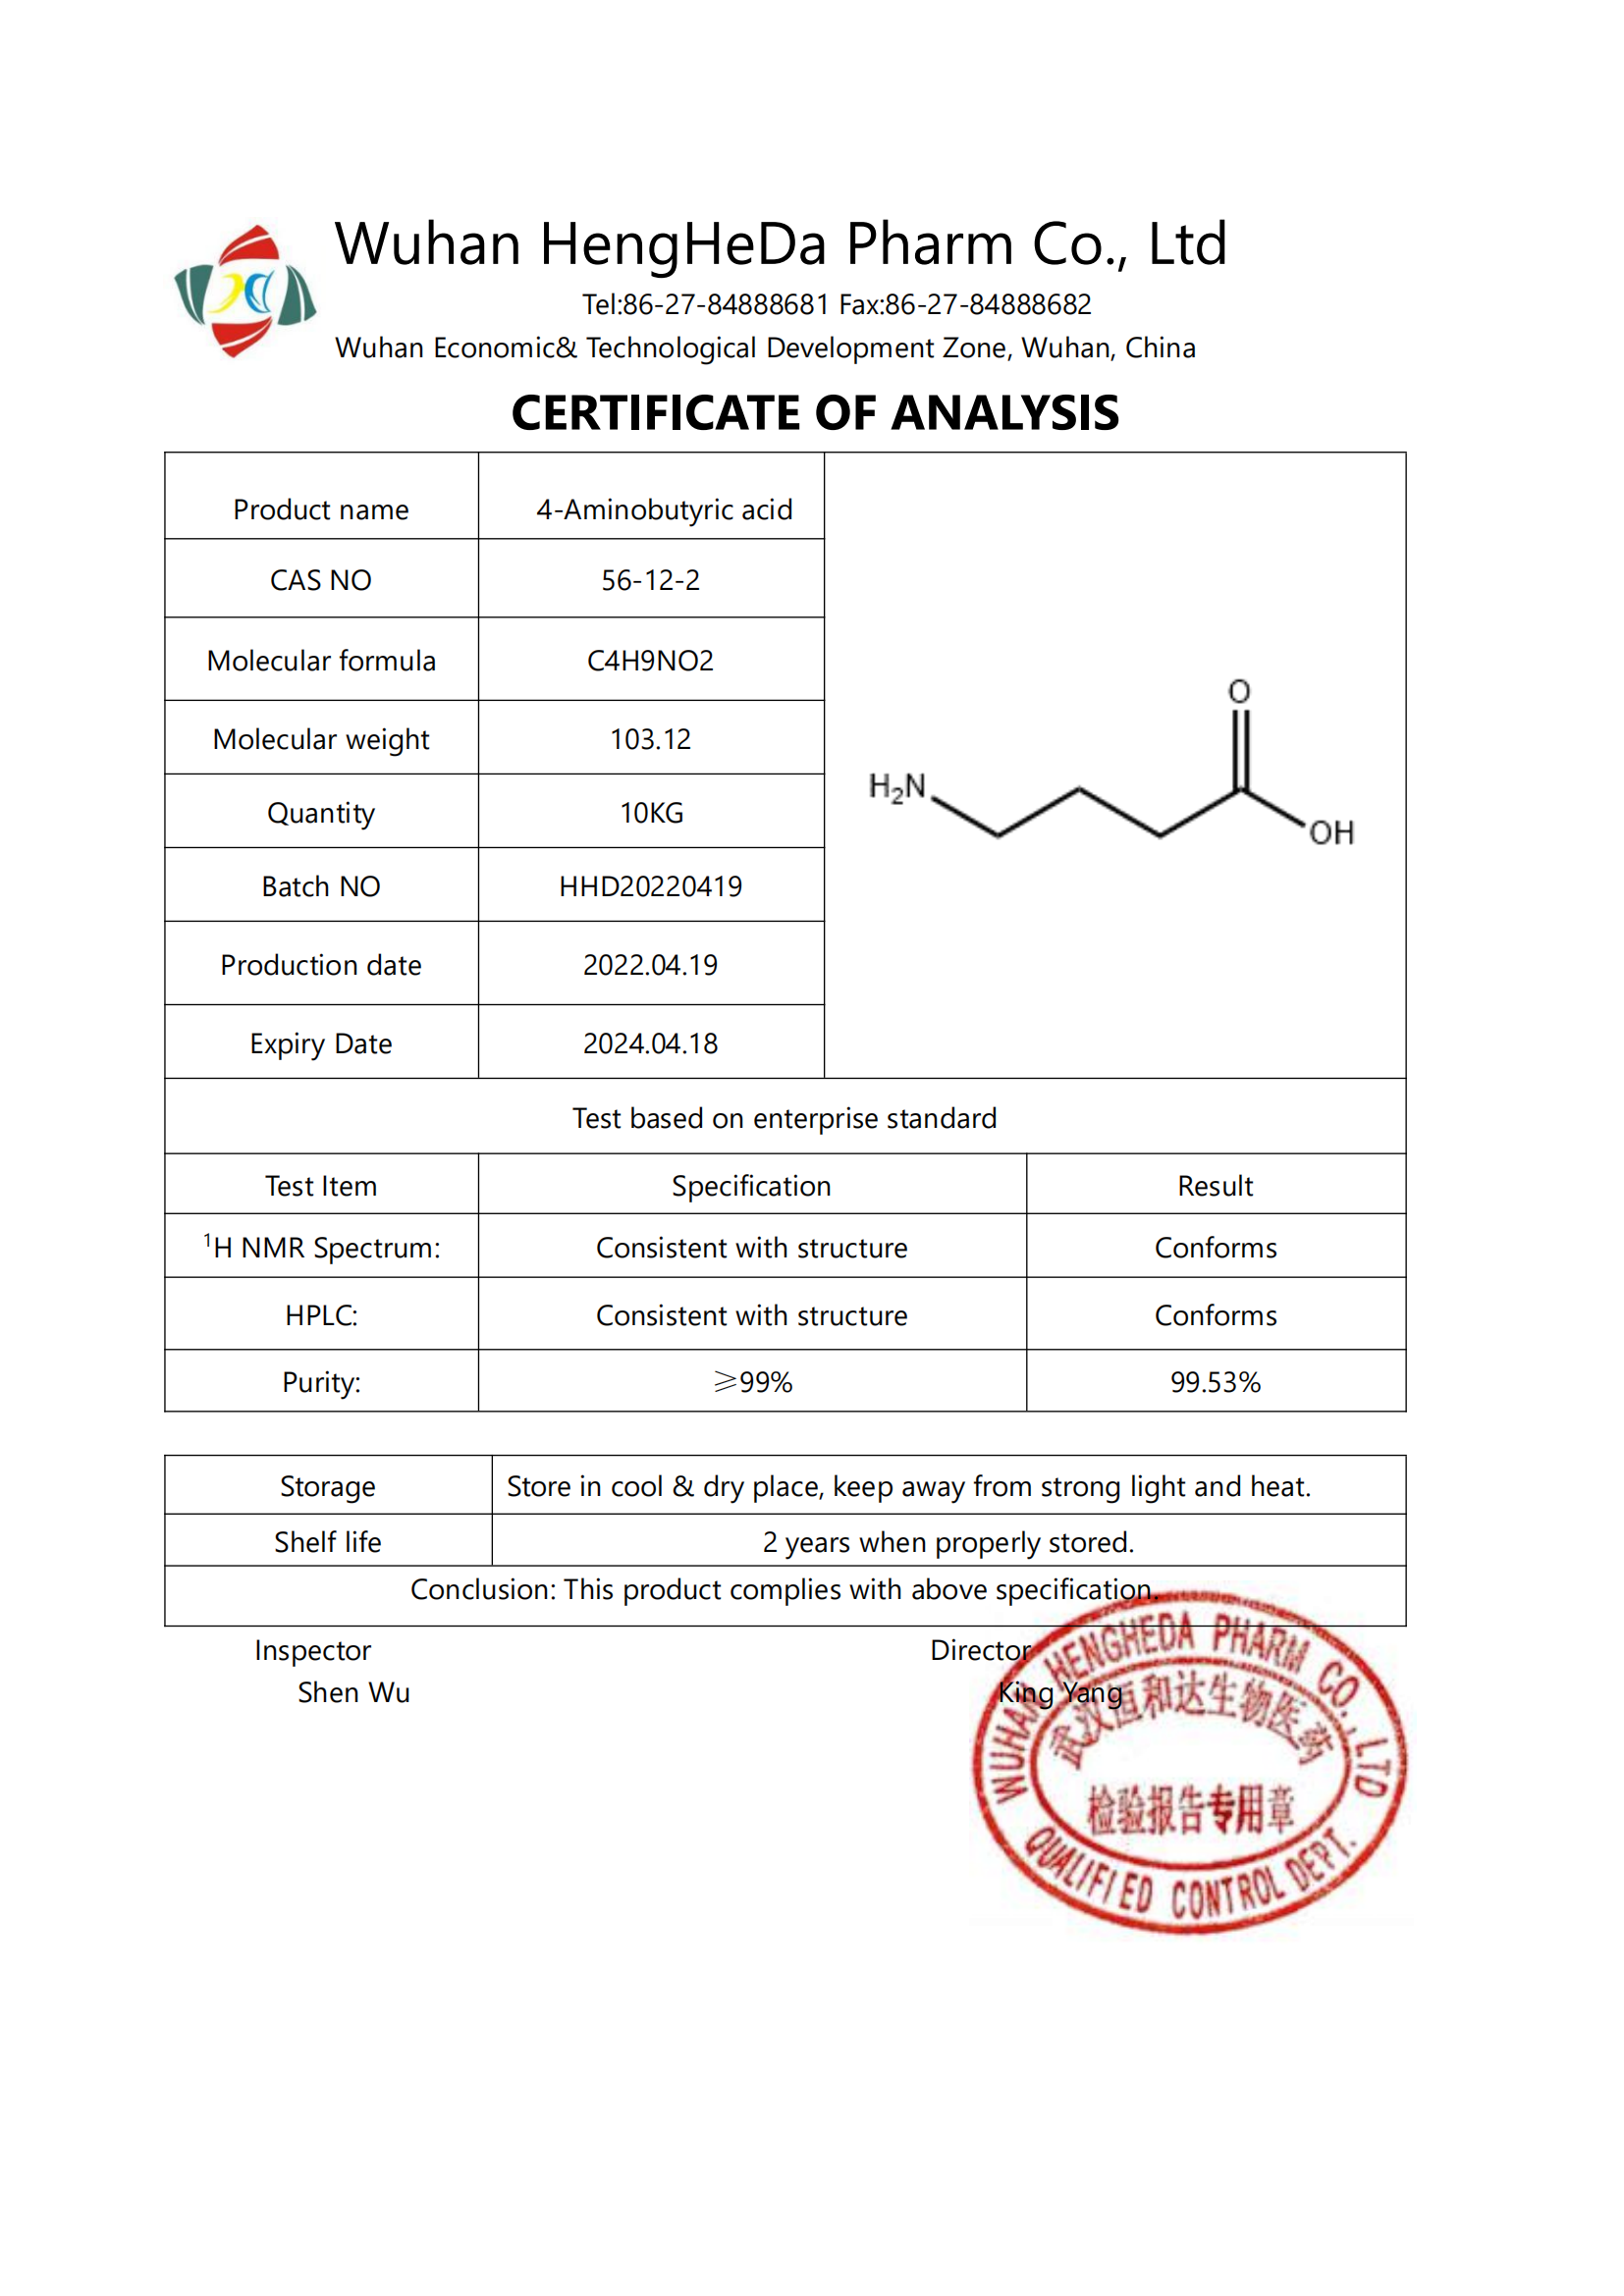 High Quality 4-Aminobutyric acid CAS 56-12-2